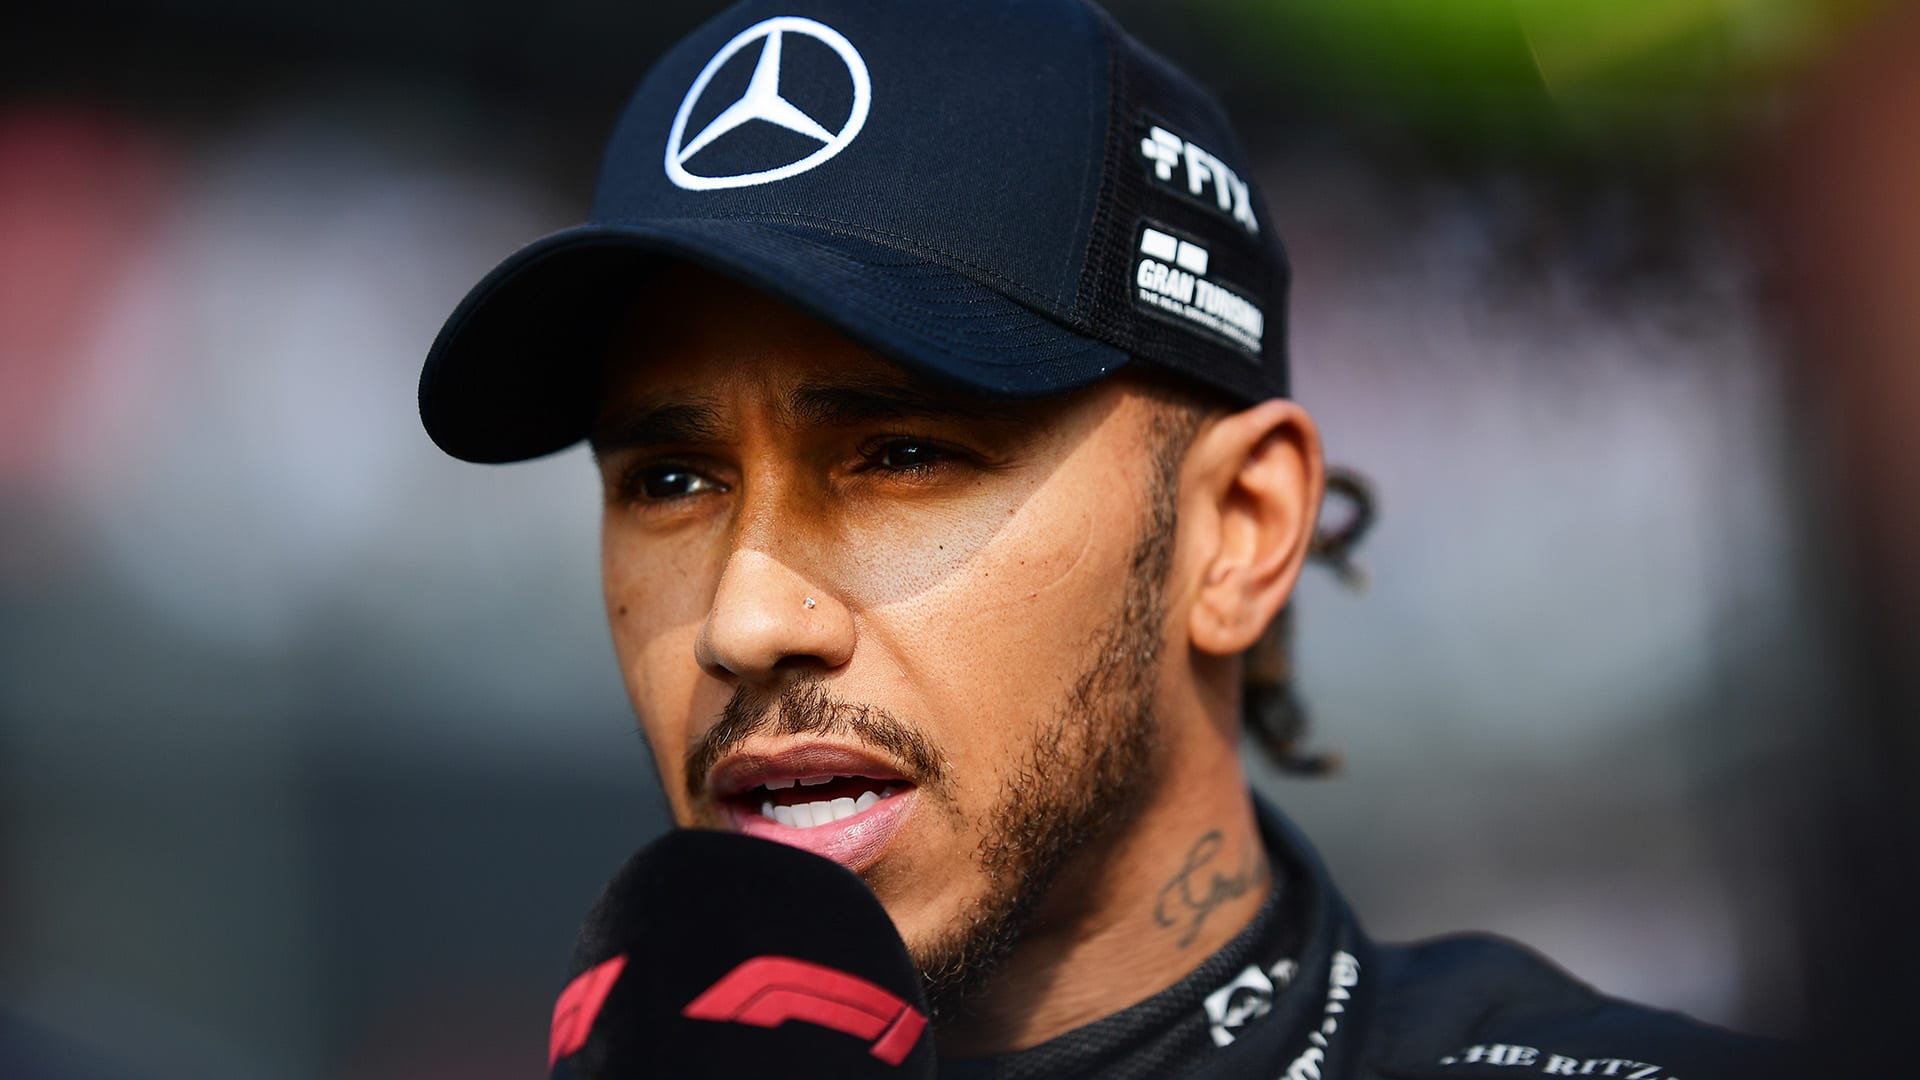 Lewis Hamilton - F1 Driver for Mercedes